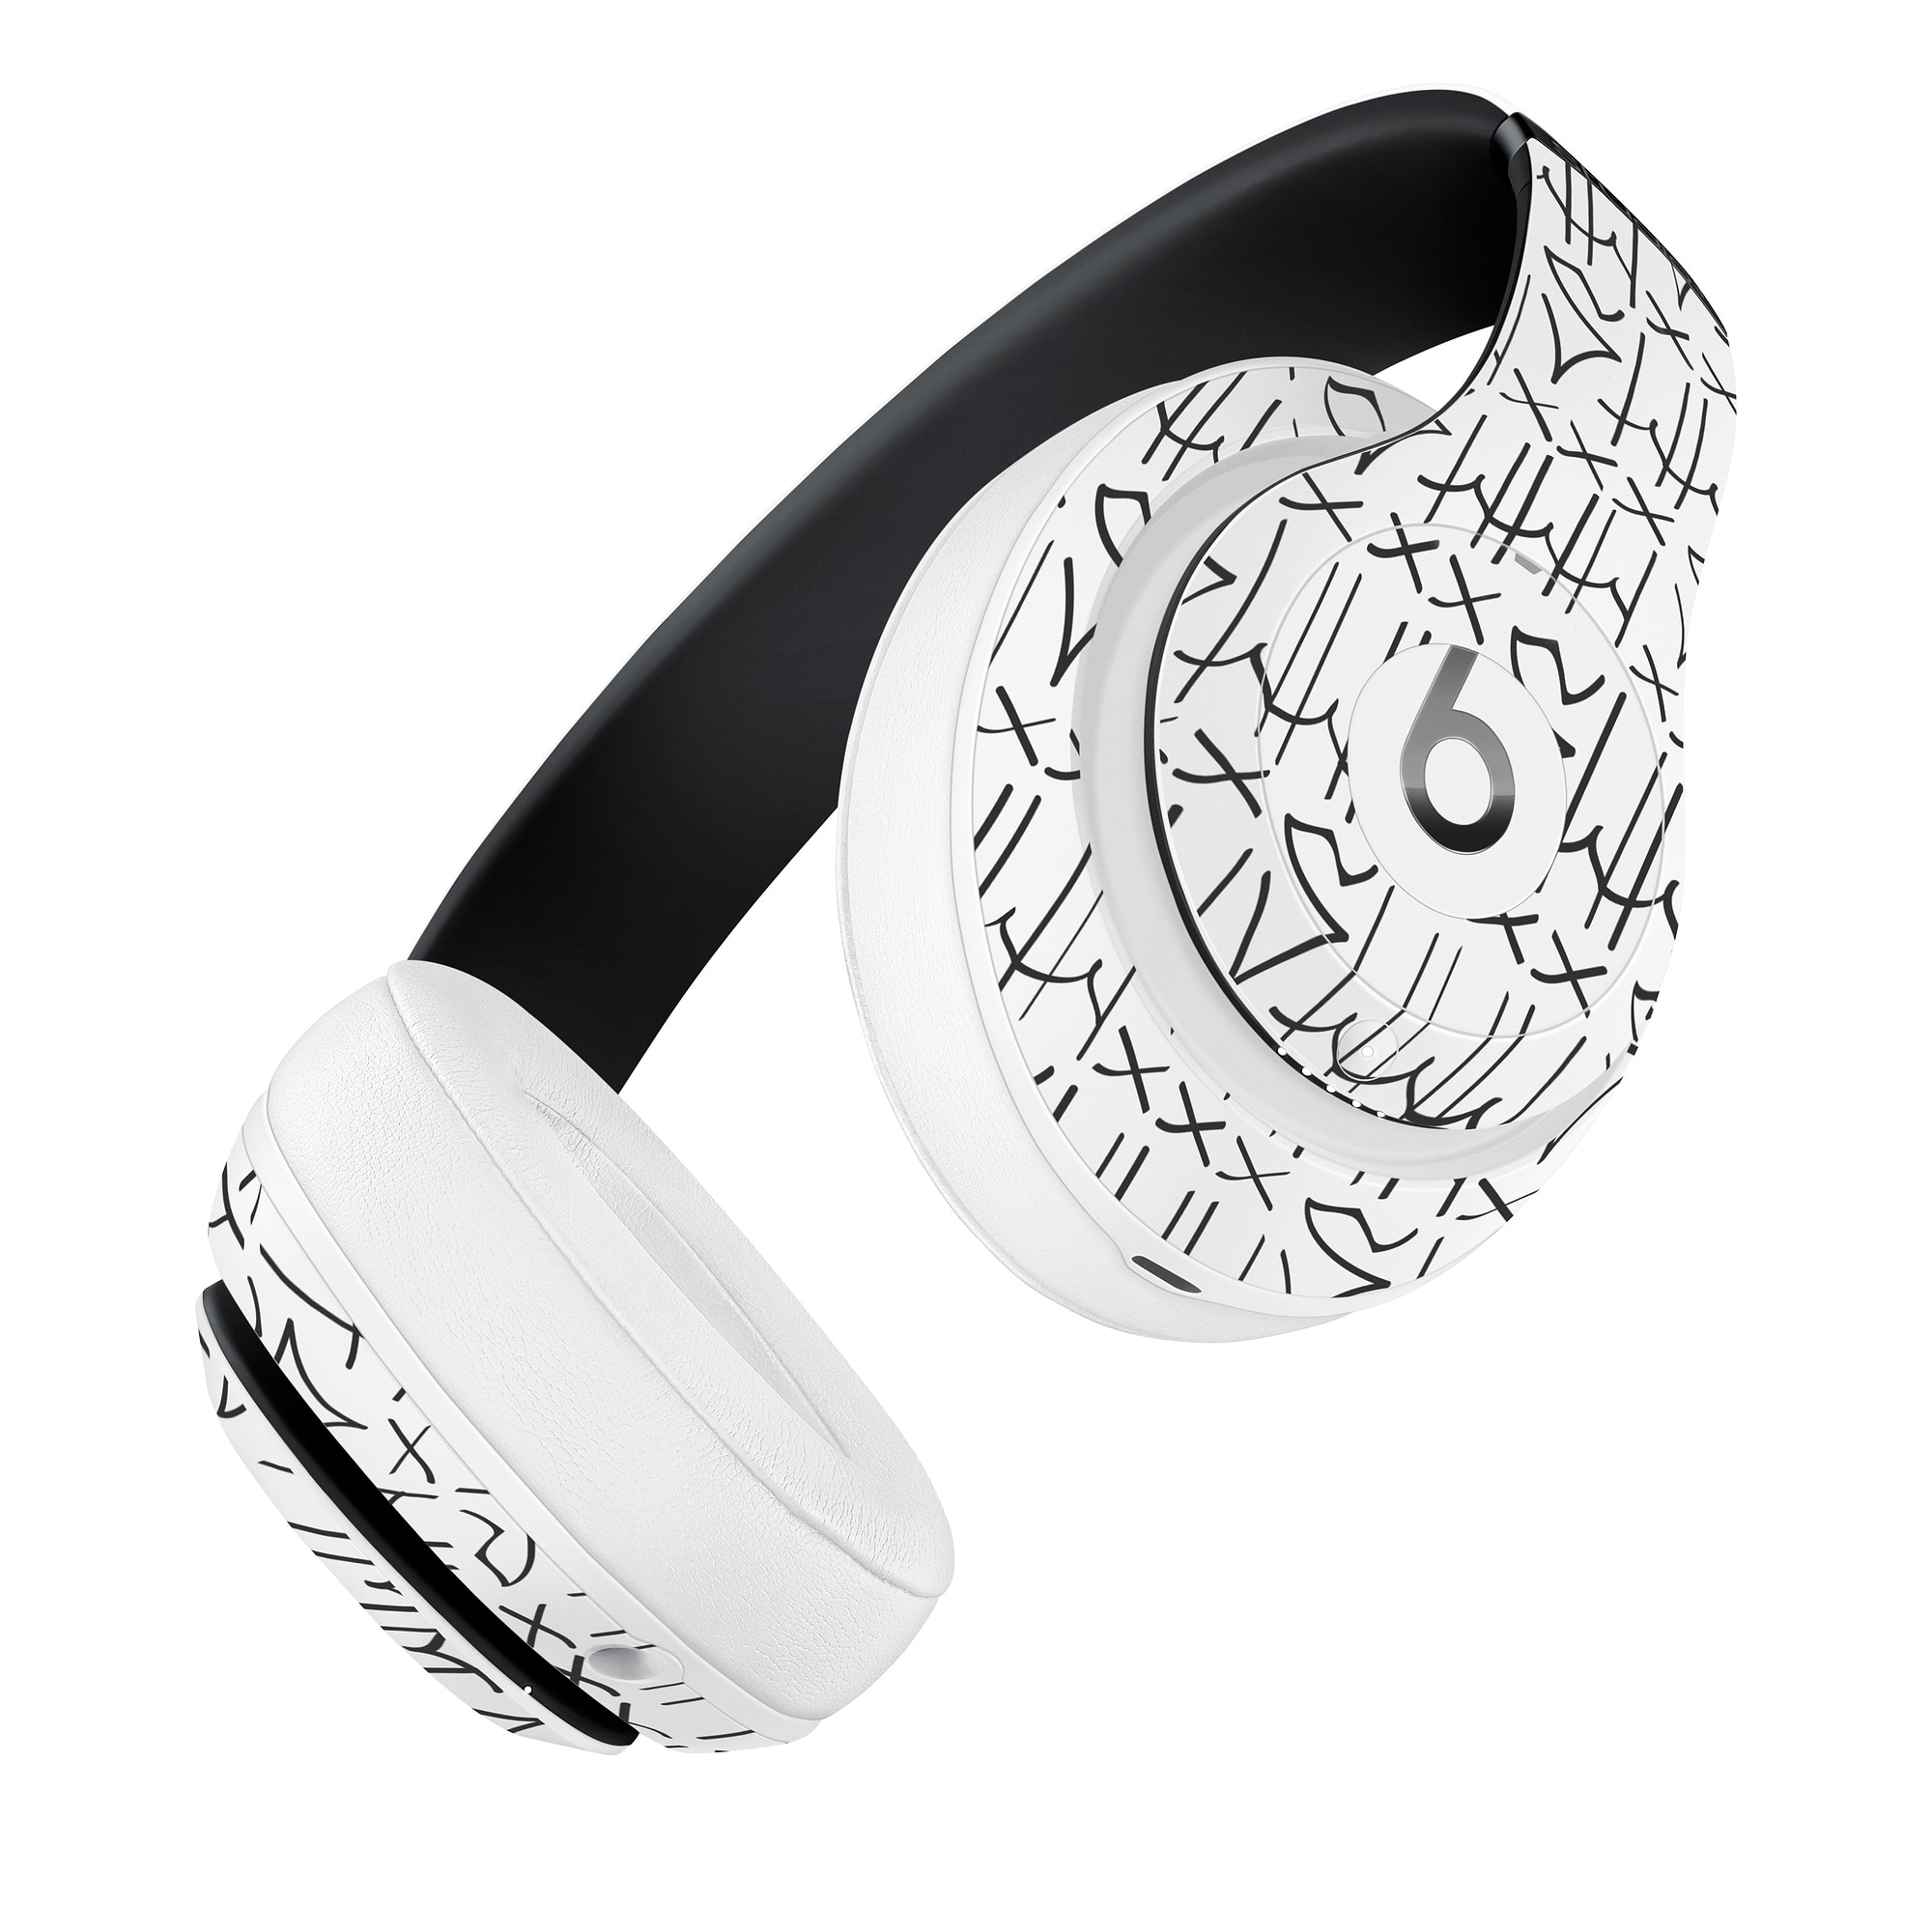 Here comes a special edition “Neymar Jr.” of Beats Studio3 Wireless headphones